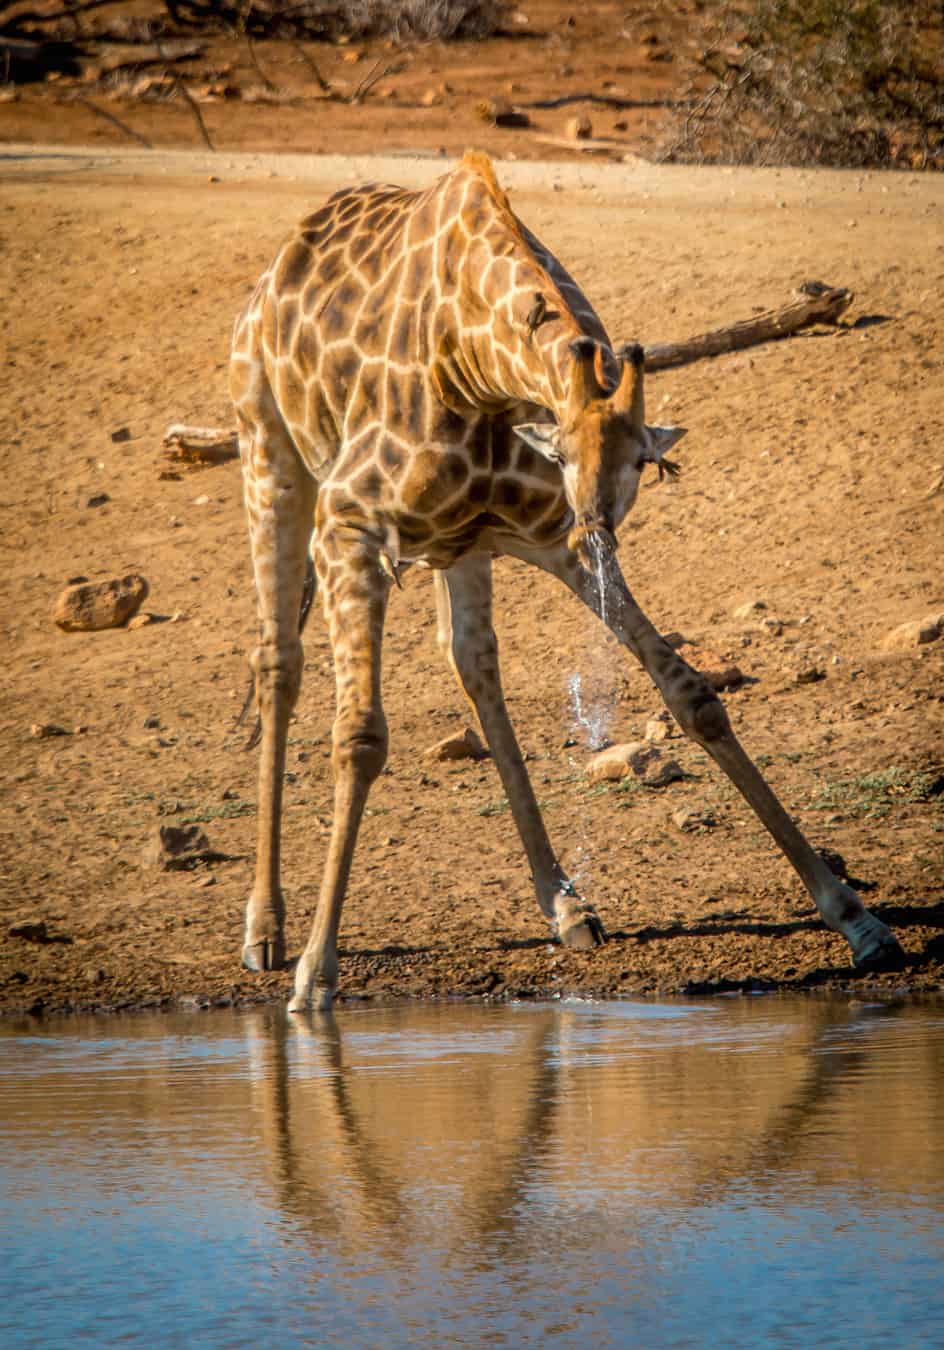 Giraffe taking a drink